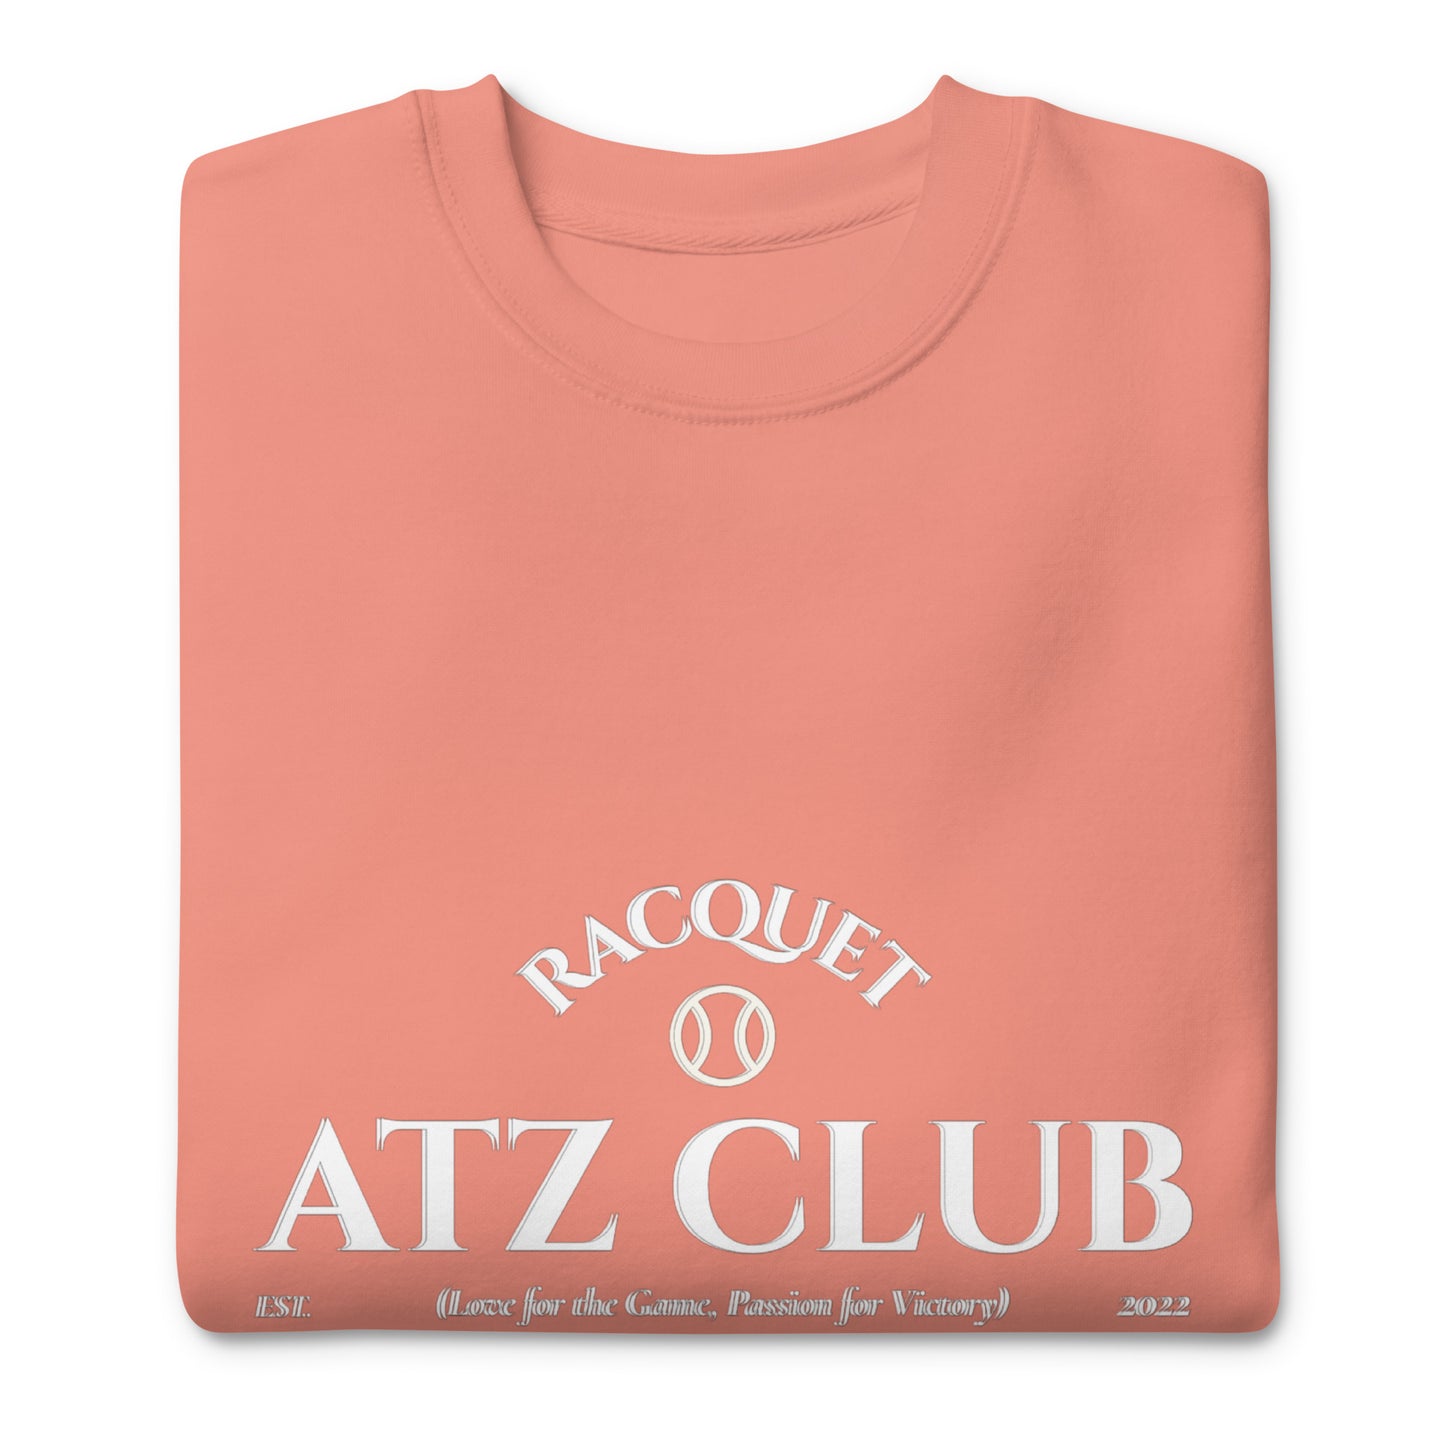 Atziluth Gallery "ATZ Club" Unisex Premium Sweatshirt